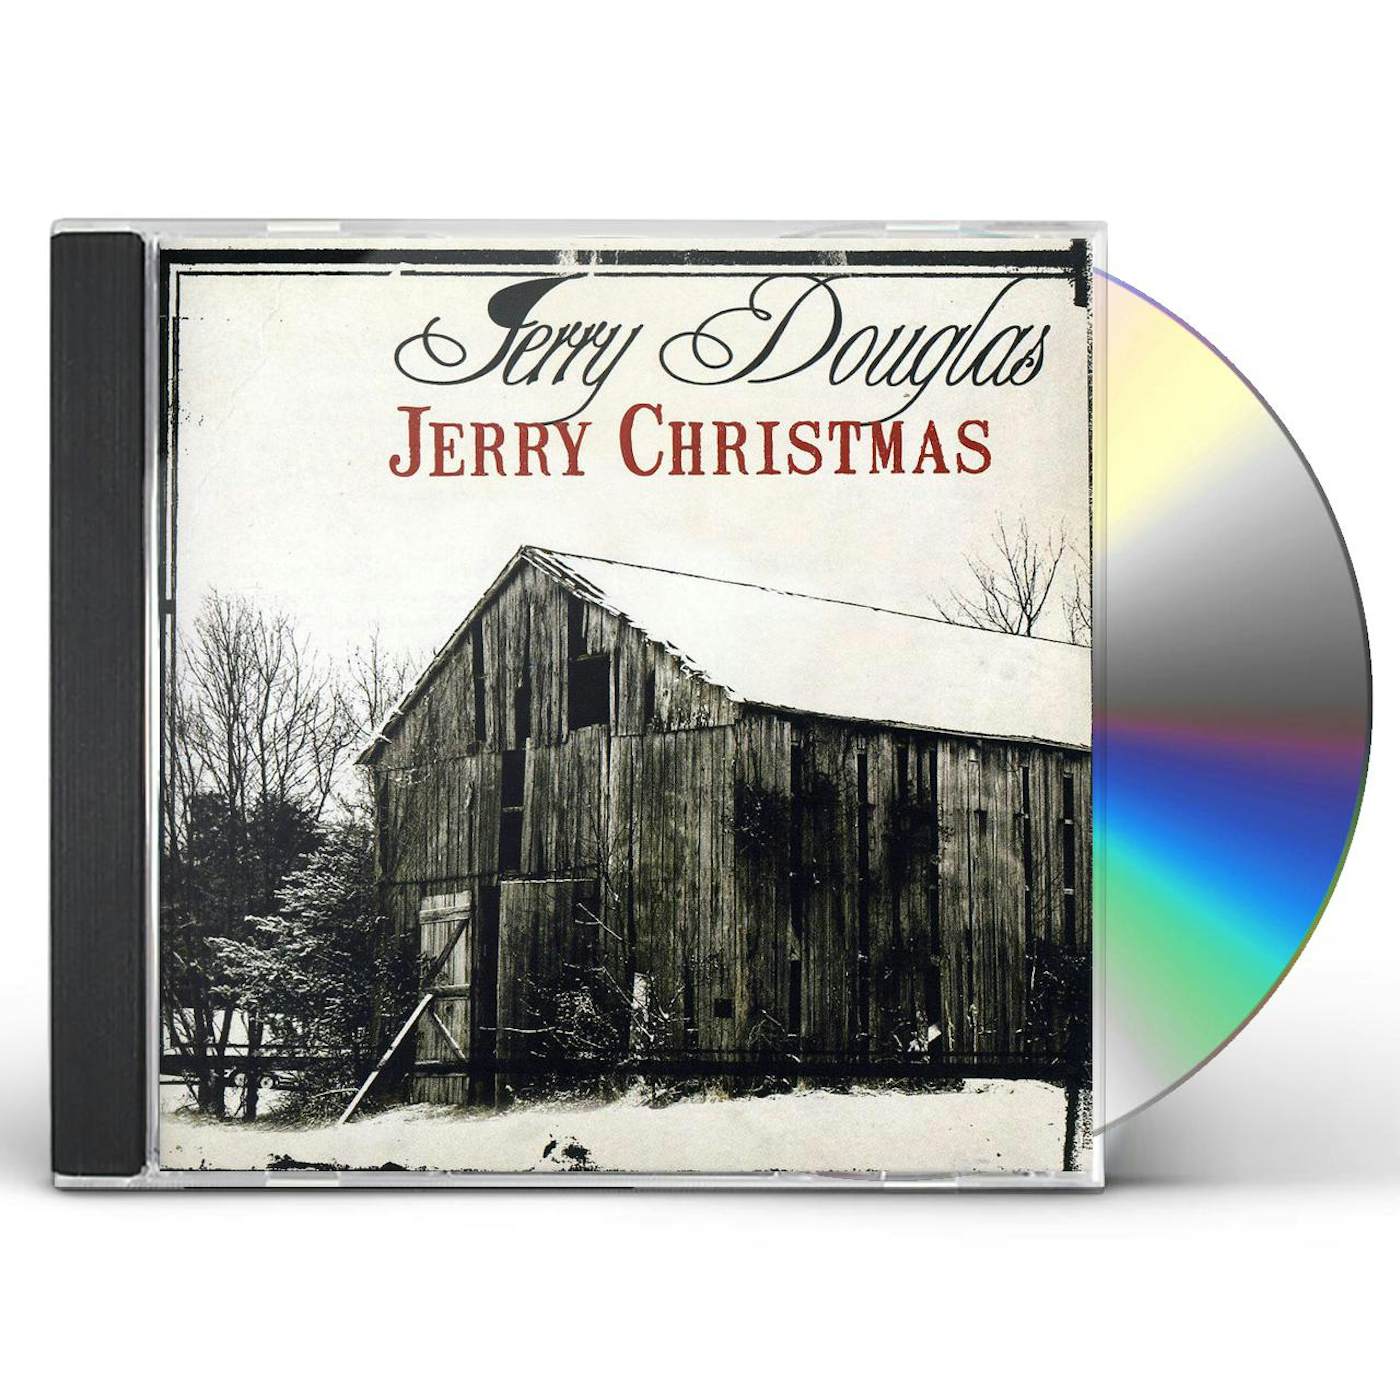 Jerry Douglas JERRY CHRISTMAS CD